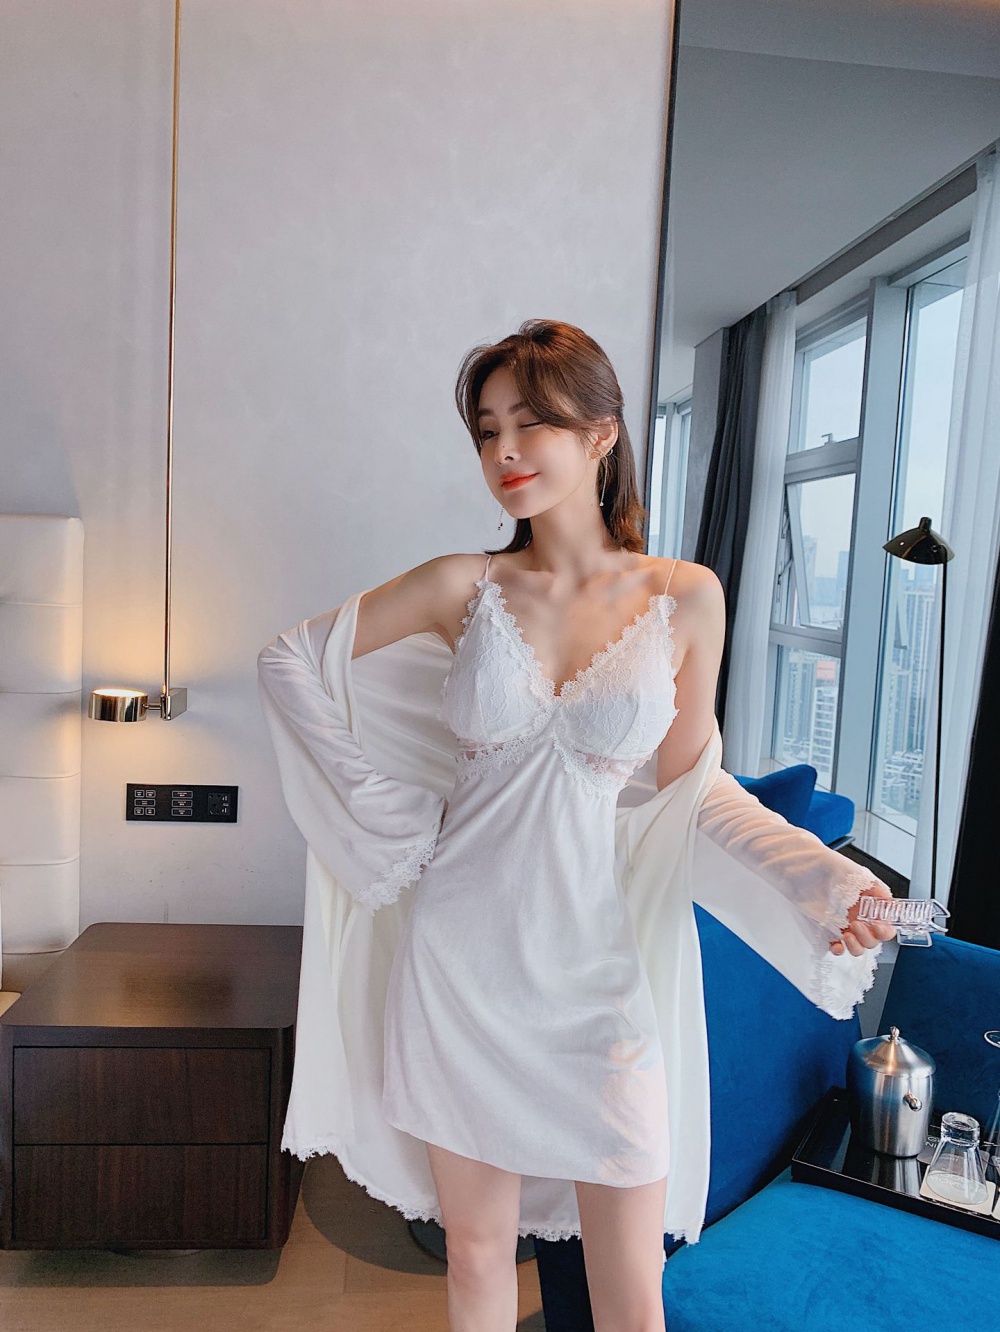 Sexy homewear hollow long sleeve nightgown 2pcs set